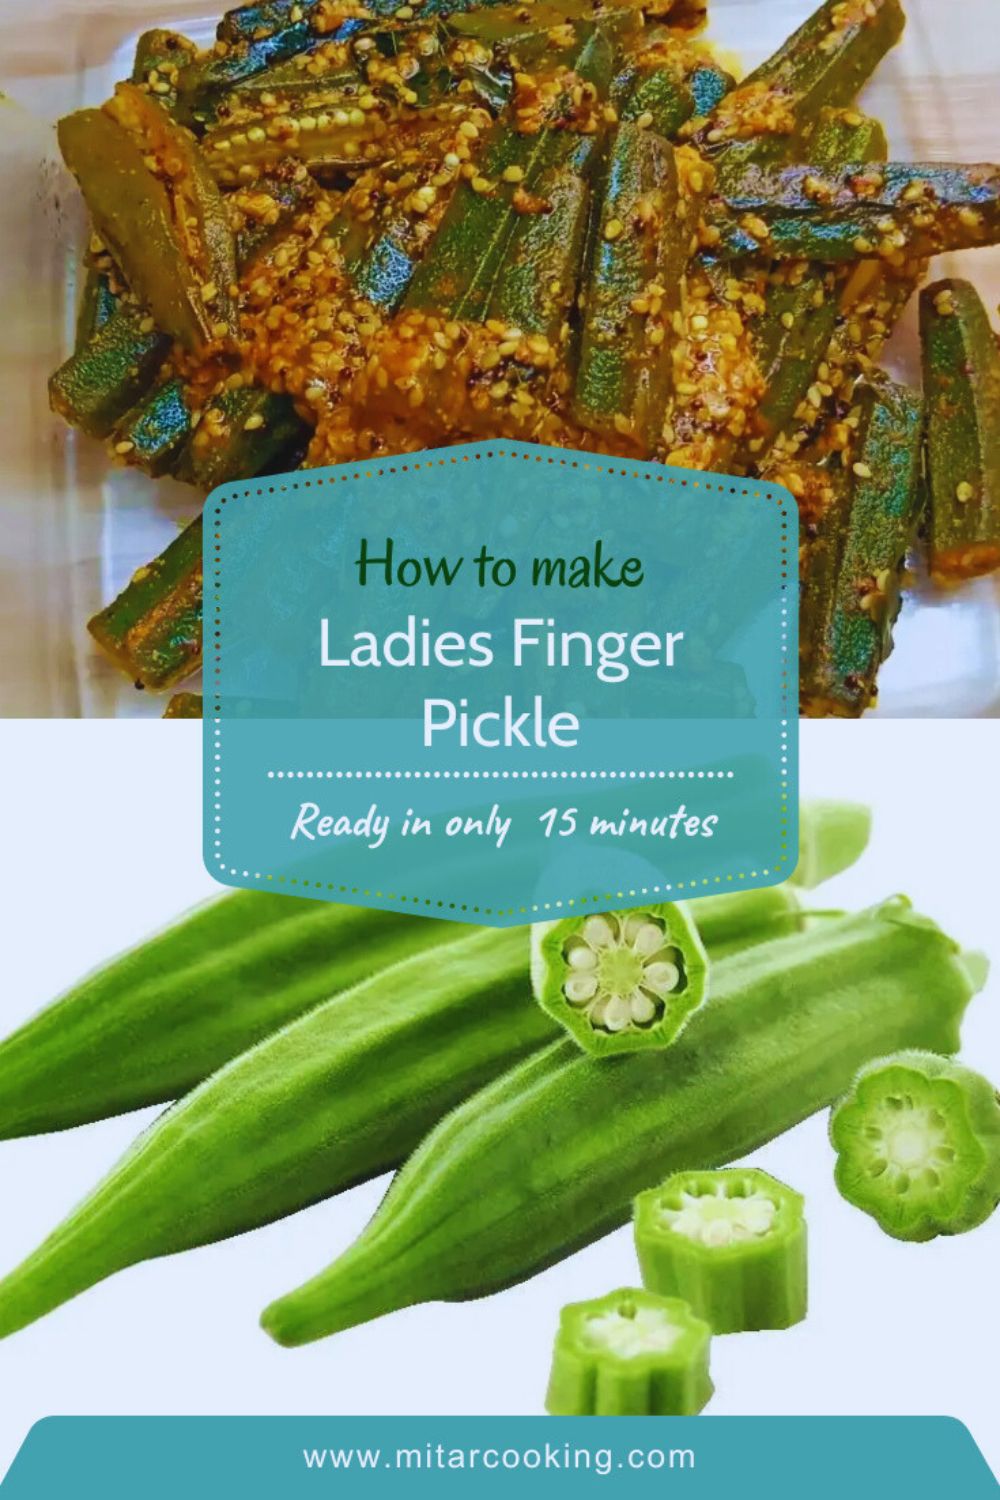 Ladies Finger Pickle